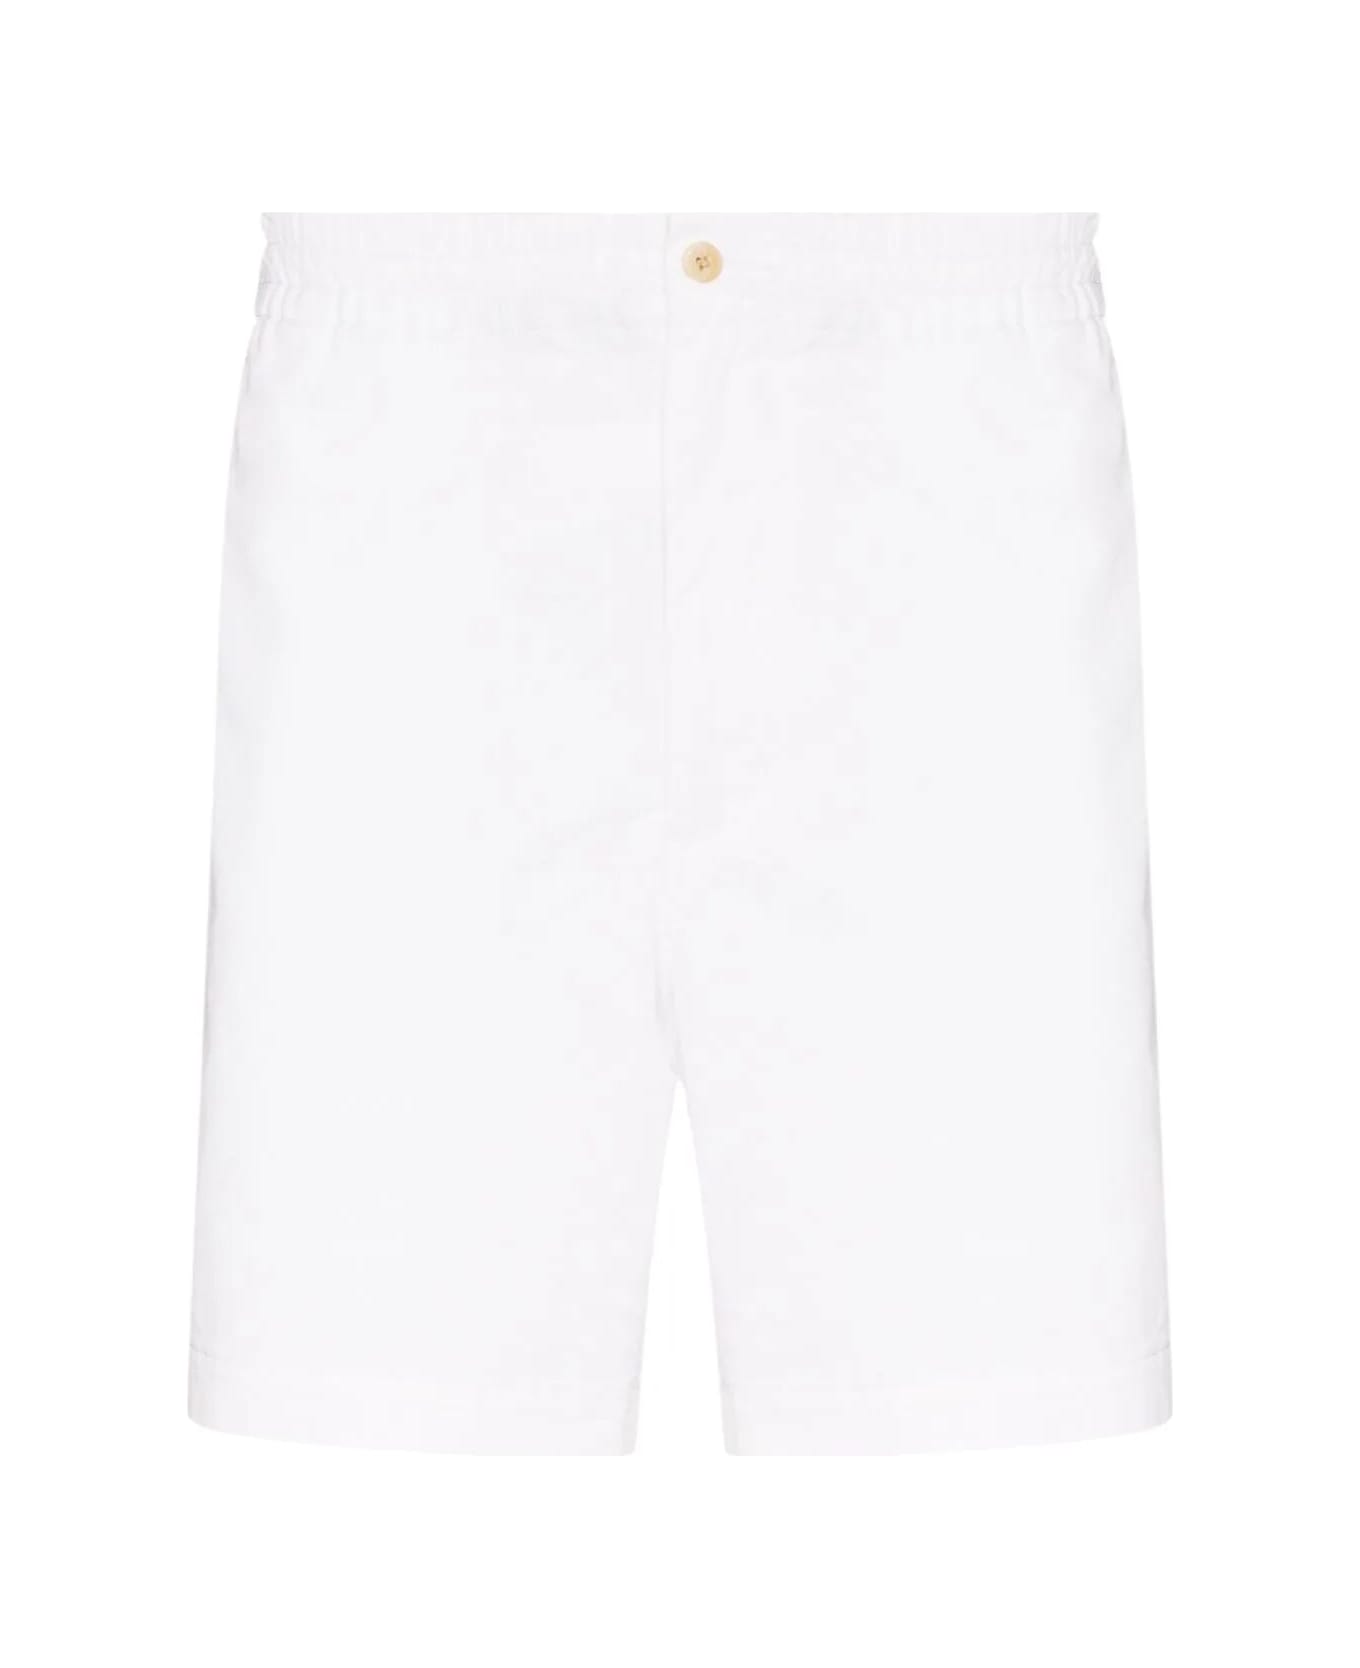 Polo Ralph Lauren Classic Shorts - White